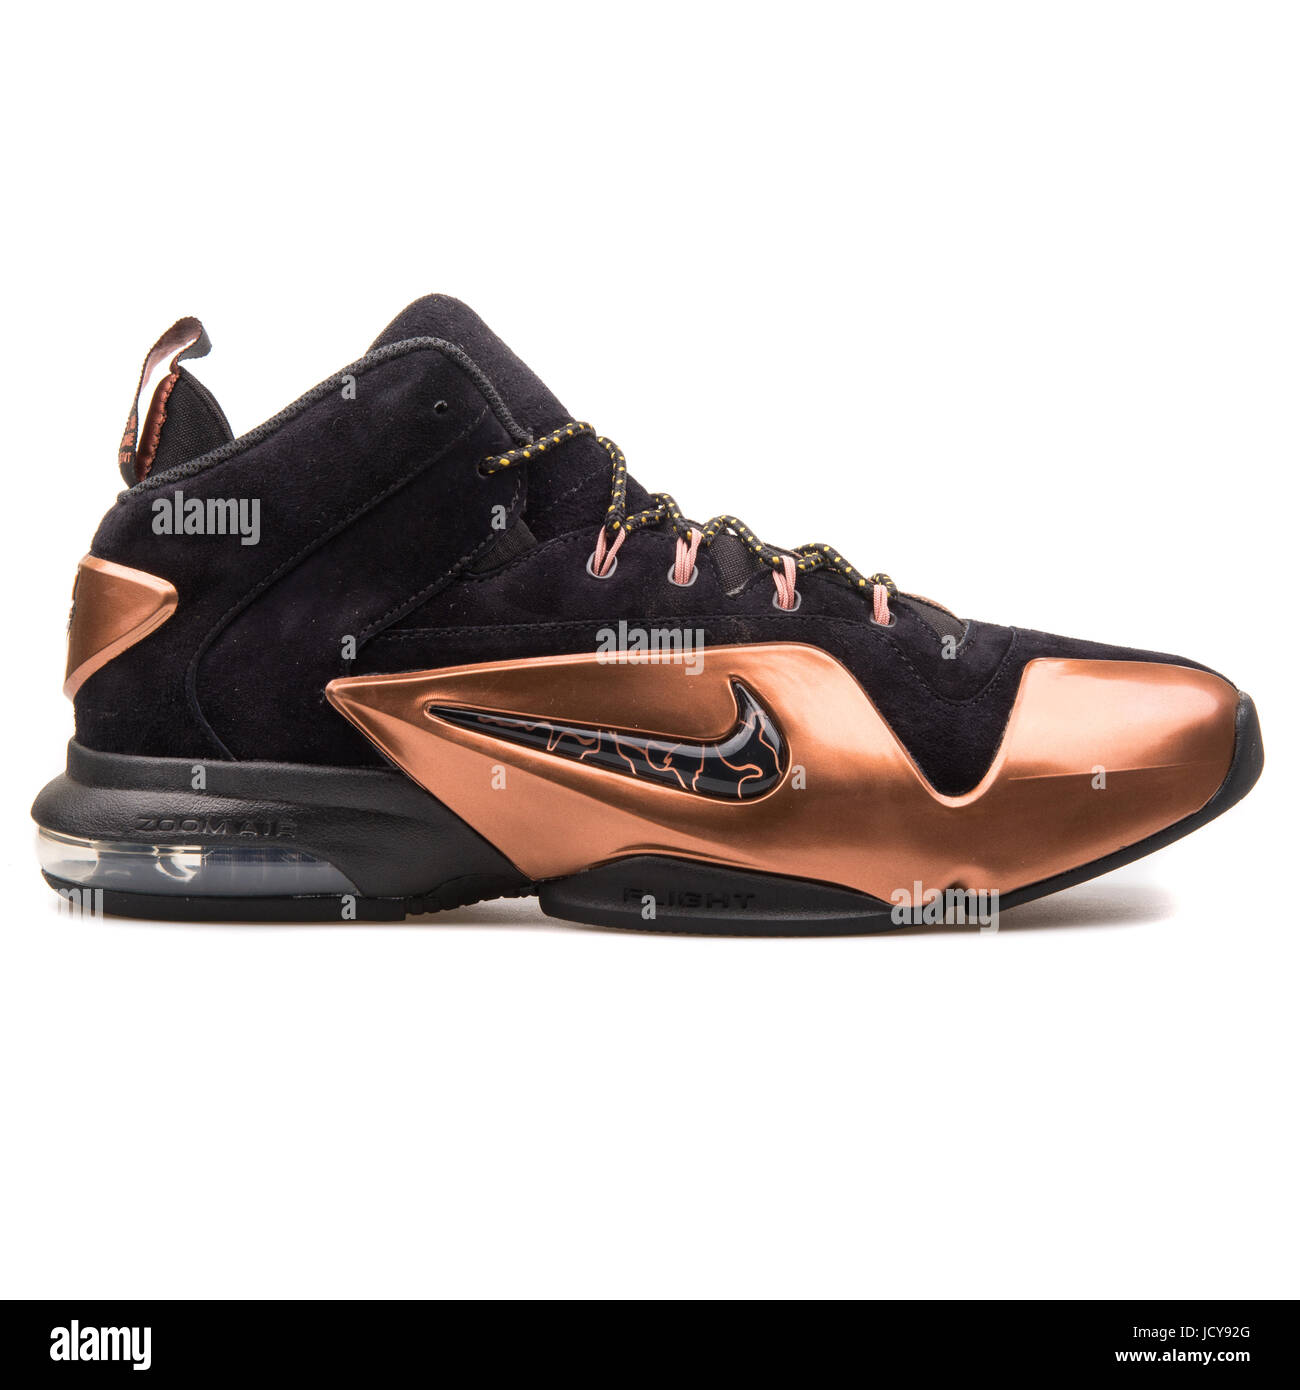 Nike Zoom VI-Penny-Black und metallischer Kupfer Herren Basketball-Schuhe -  749629-001 Stockfotografie - Alamy